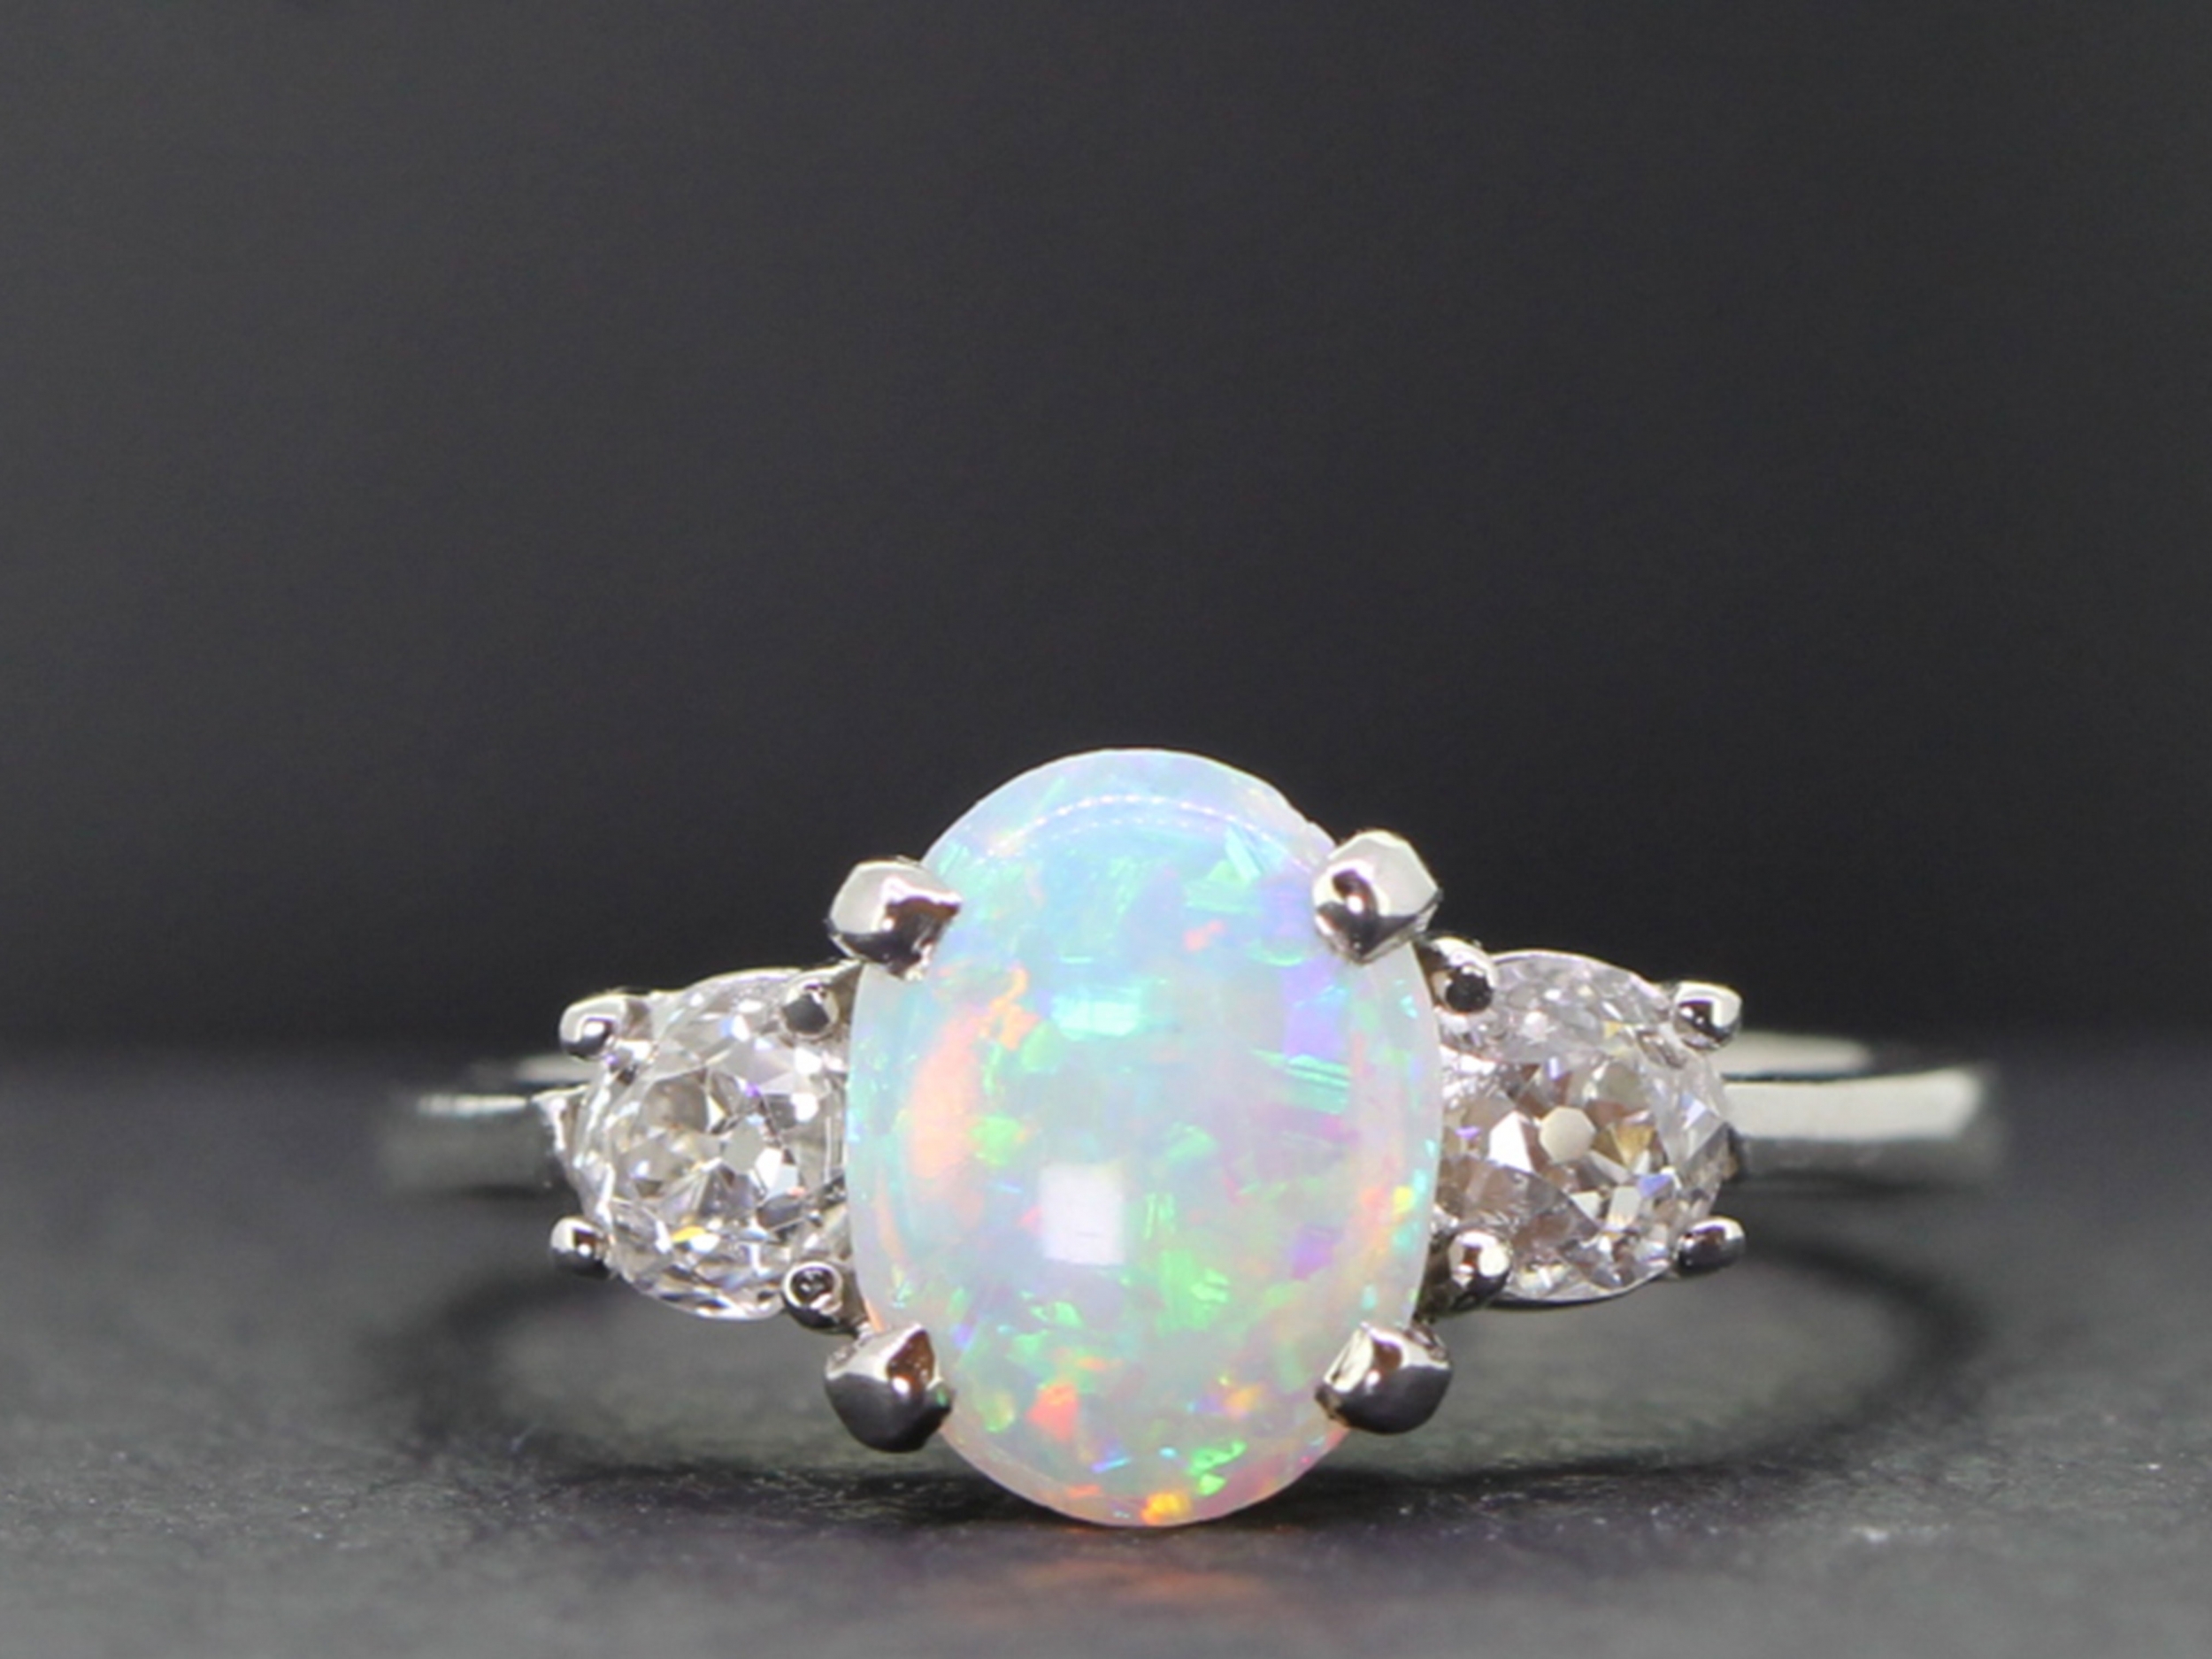 Stylish circa 1920s opal and diamond platinum trilogy ring